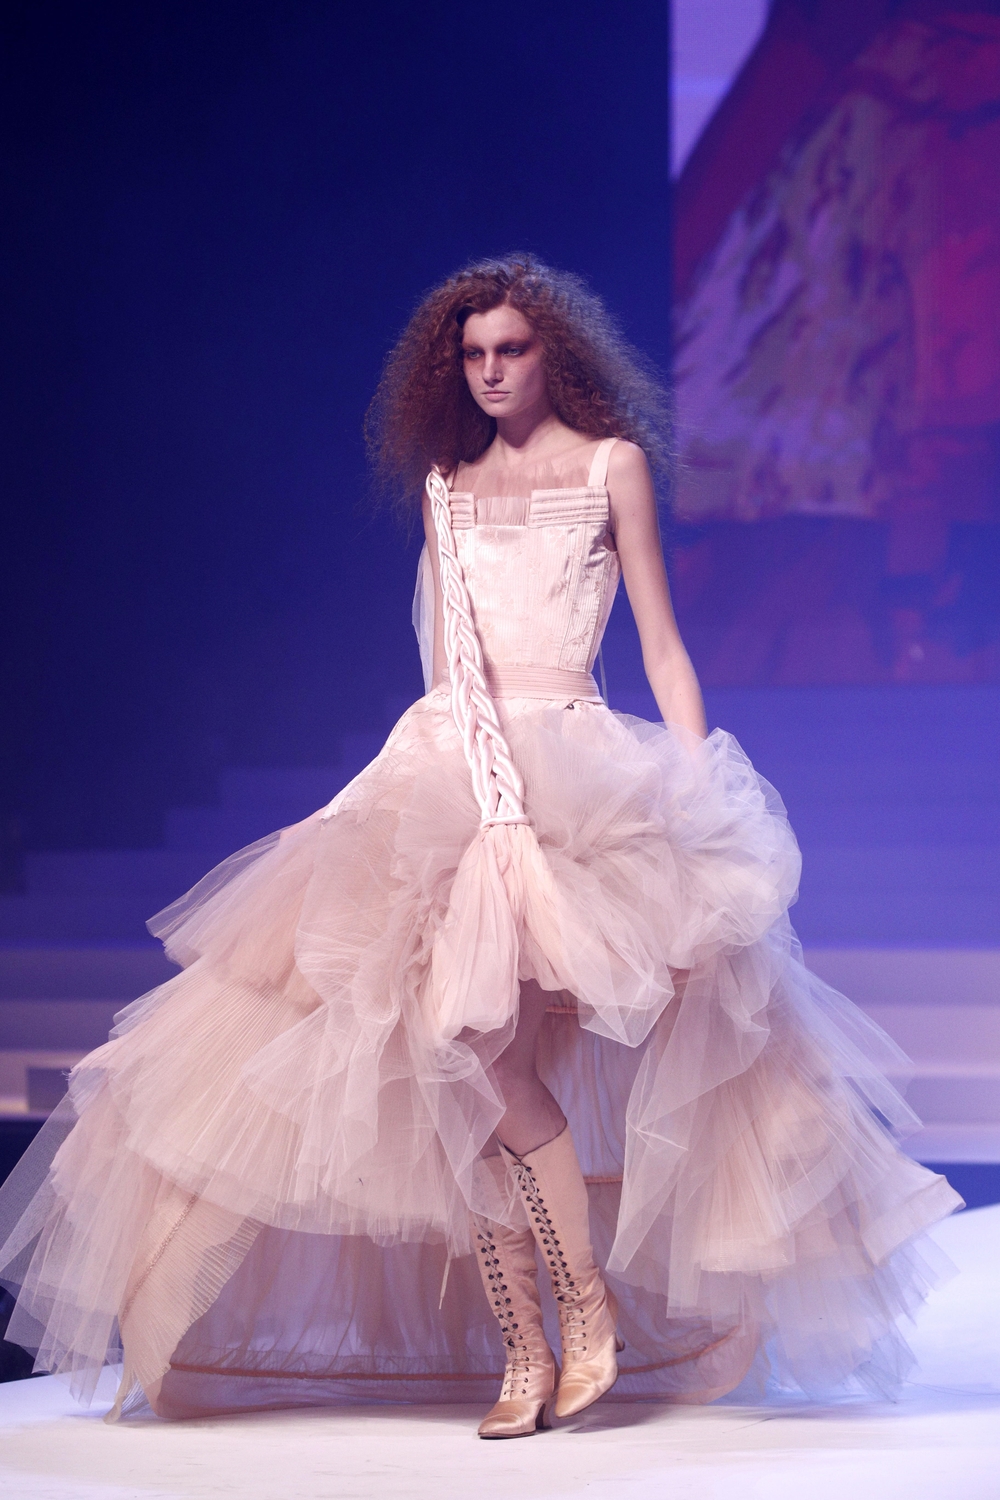 Jean Paul Gaultier - Runway - Paris Haute Couture Fashion Week S/S 2020  / YOAN VALAT